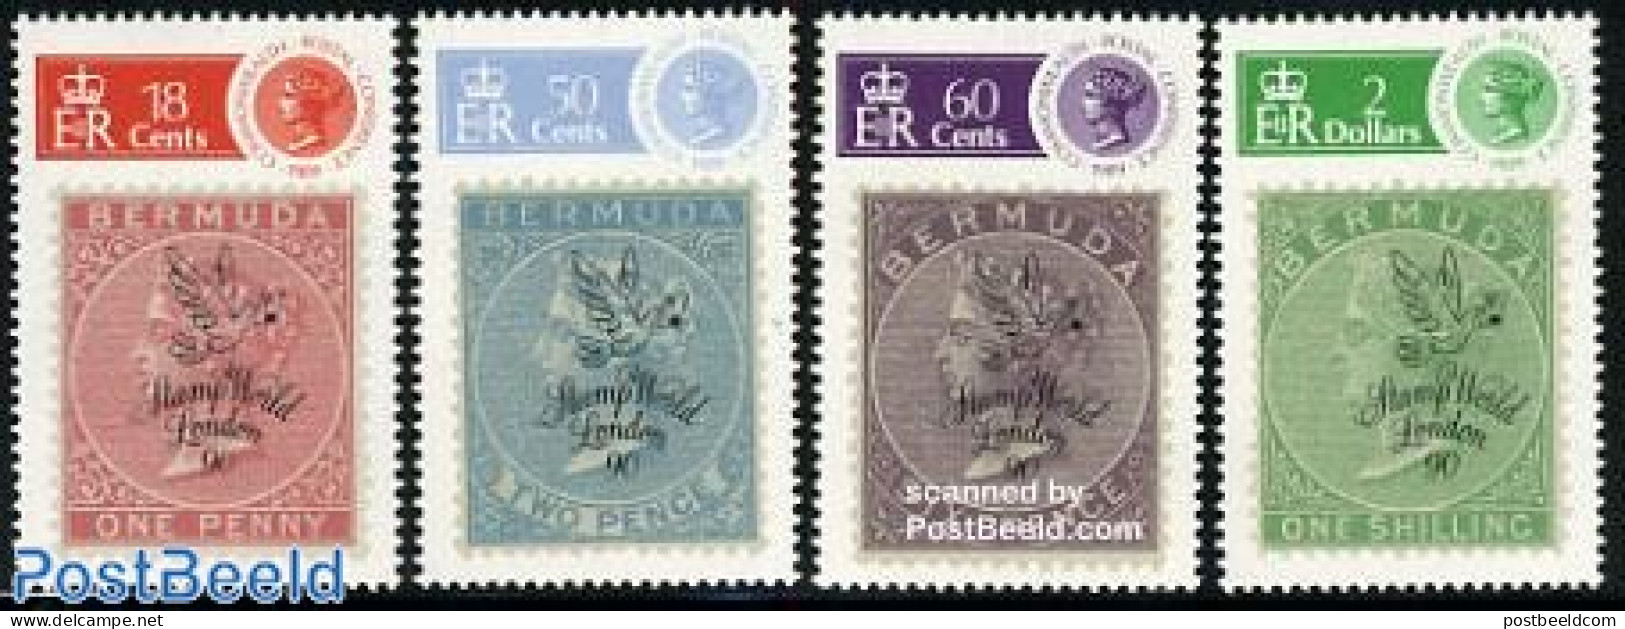 Bermuda 1990 Stamp World London 4v, Mint NH, Stamps On Stamps - Stamps On Stamps